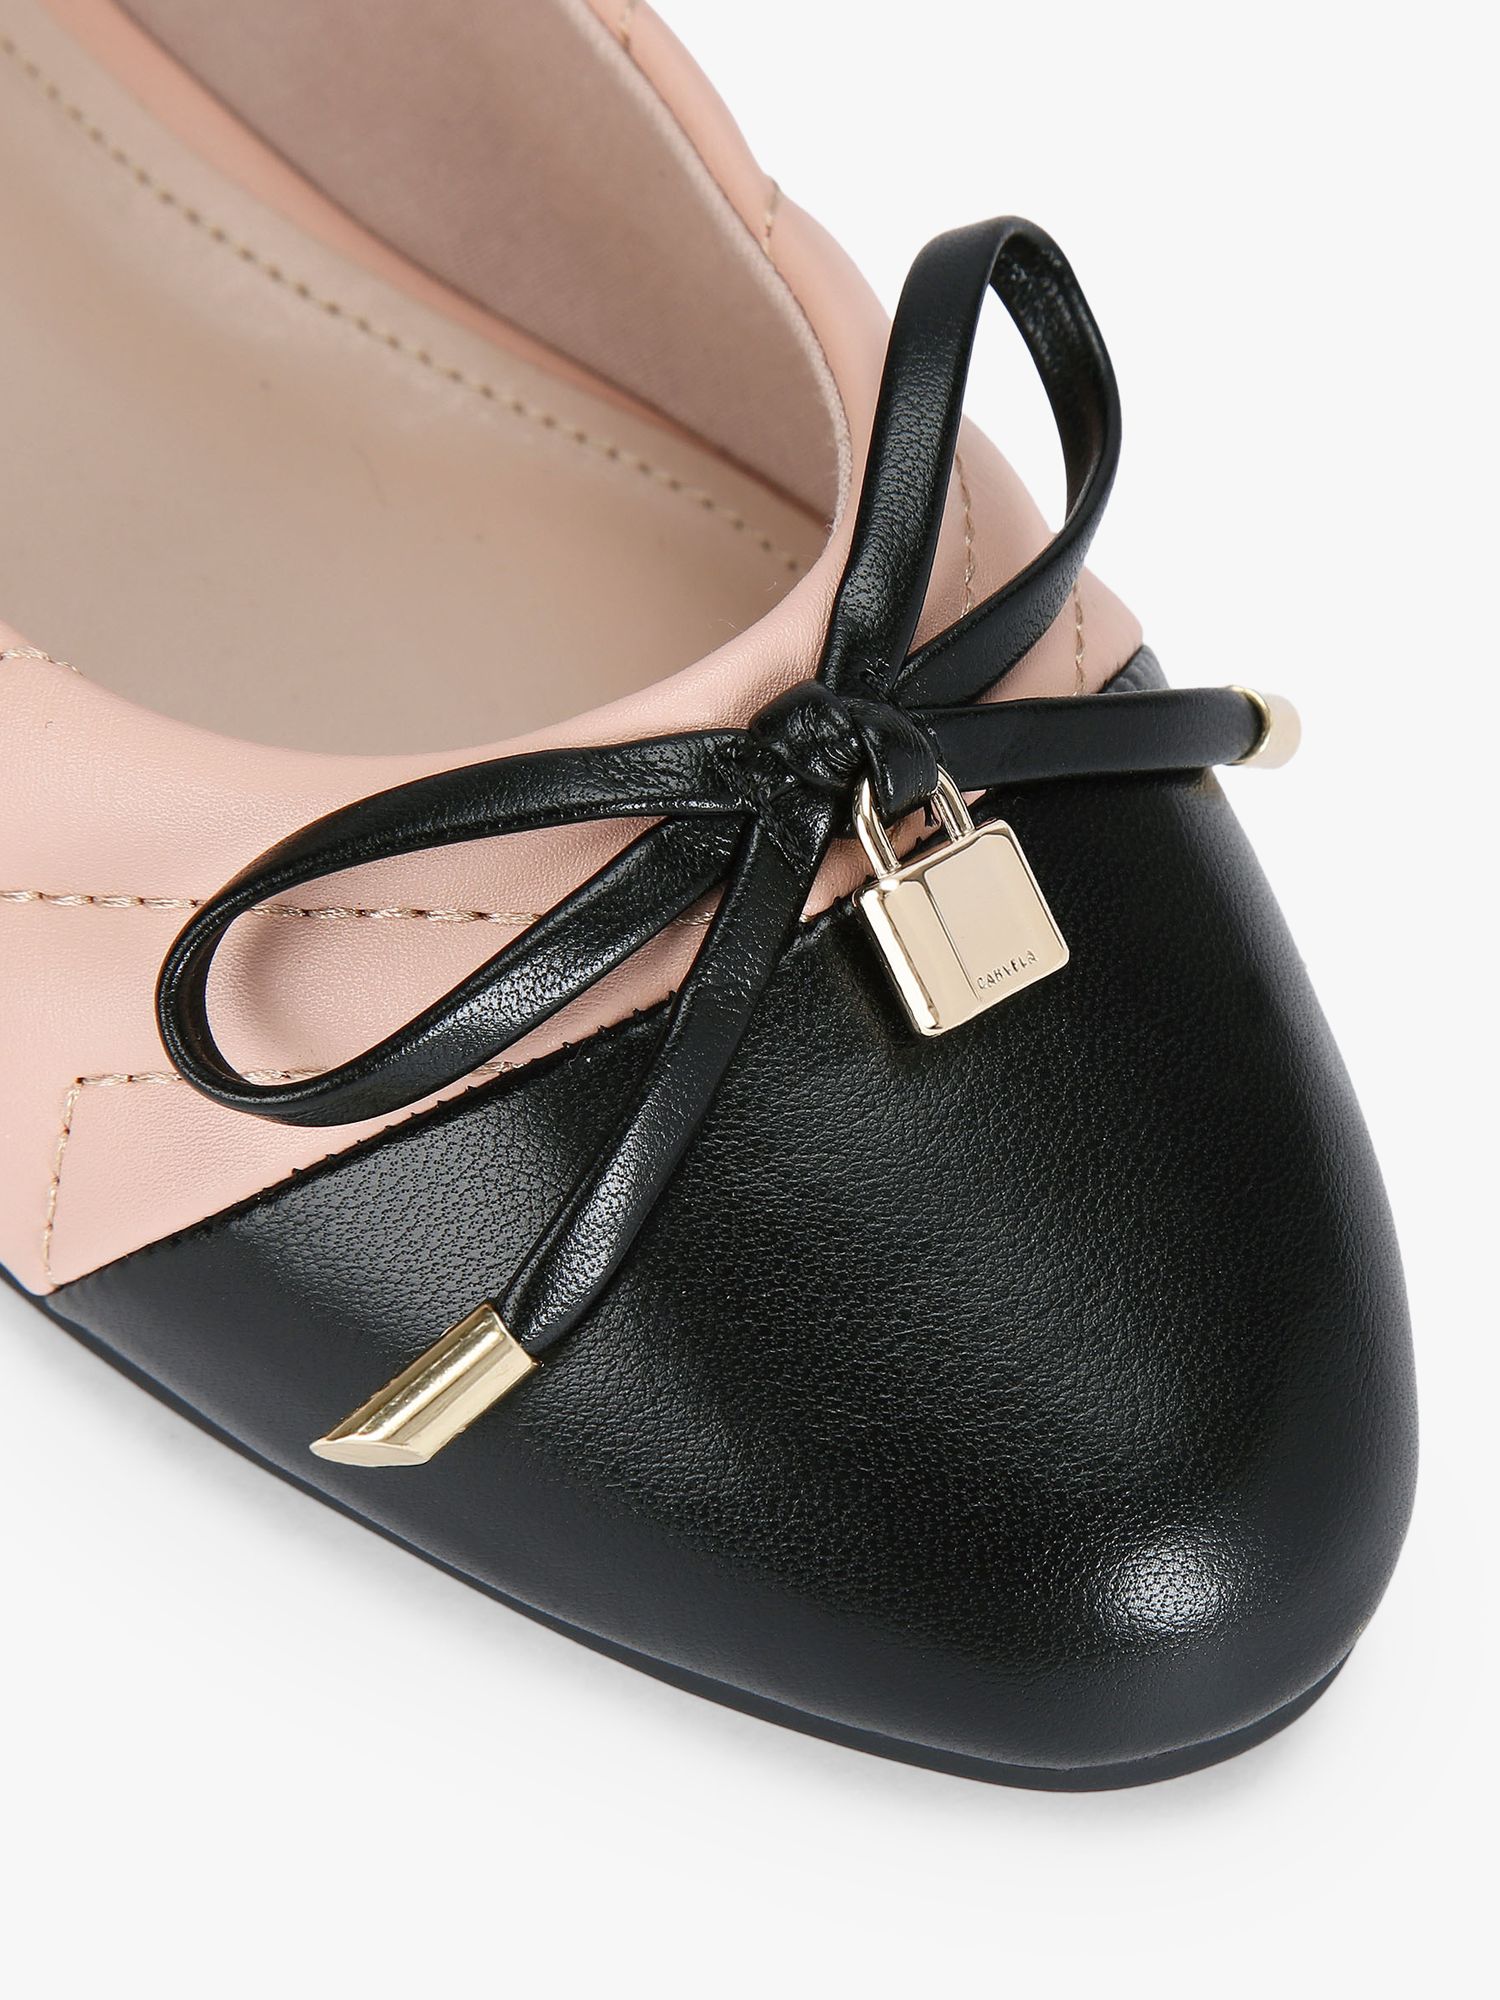 Carvela Lara Ballerina Shoes, Pink/Black, 7